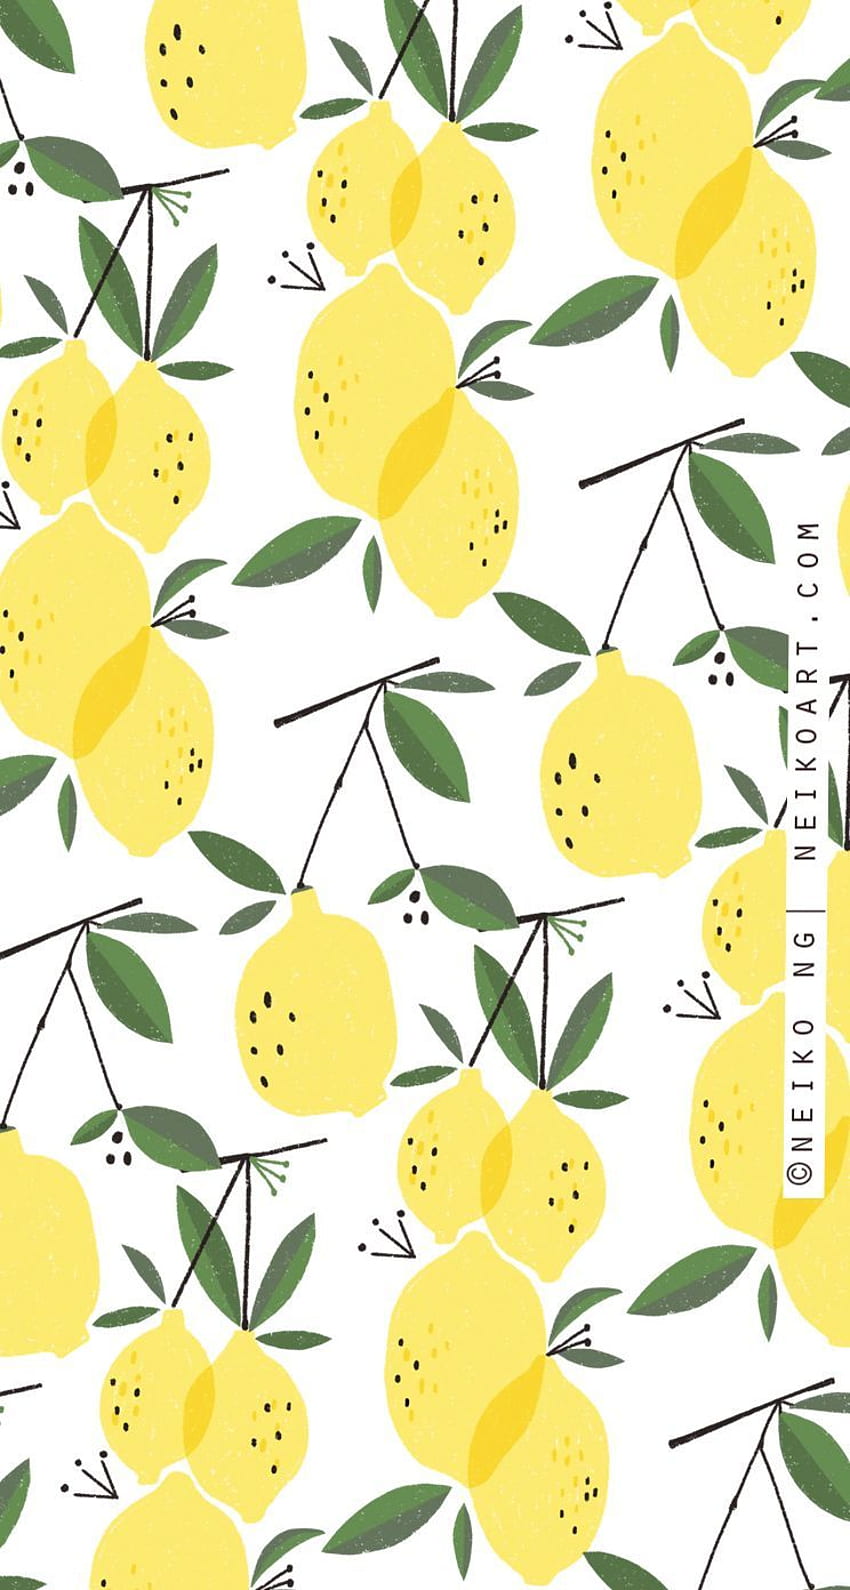 Cute Lemon wallpaper | | free to use | | by ciroyka on DeviantArt